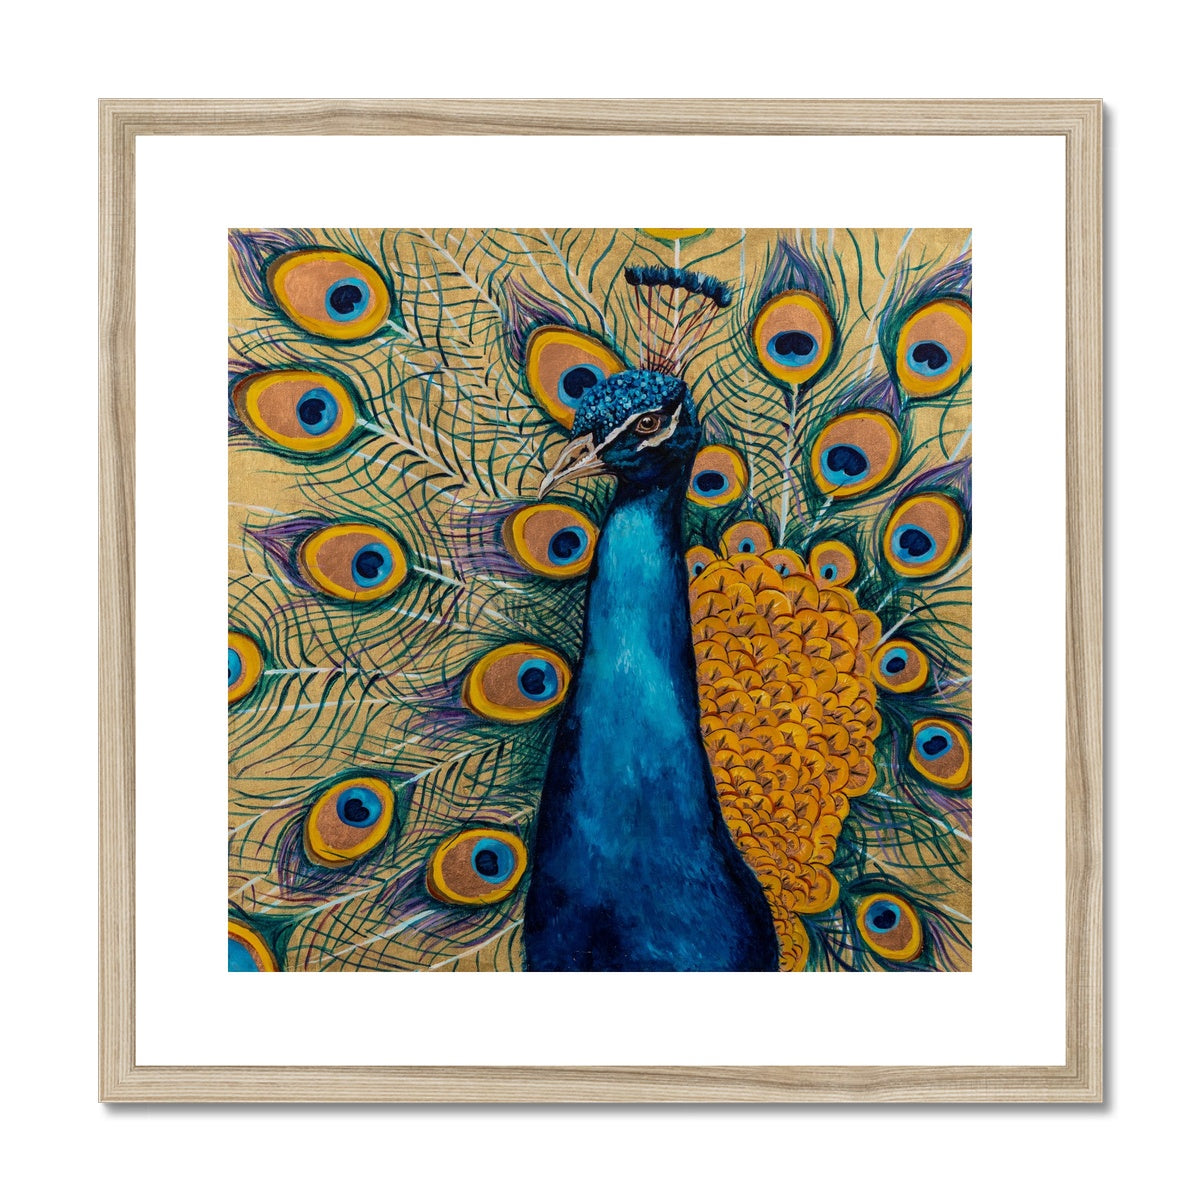 Regal Beauty: A Vibrant Color Art Print of a Peacock Perched on a Bran